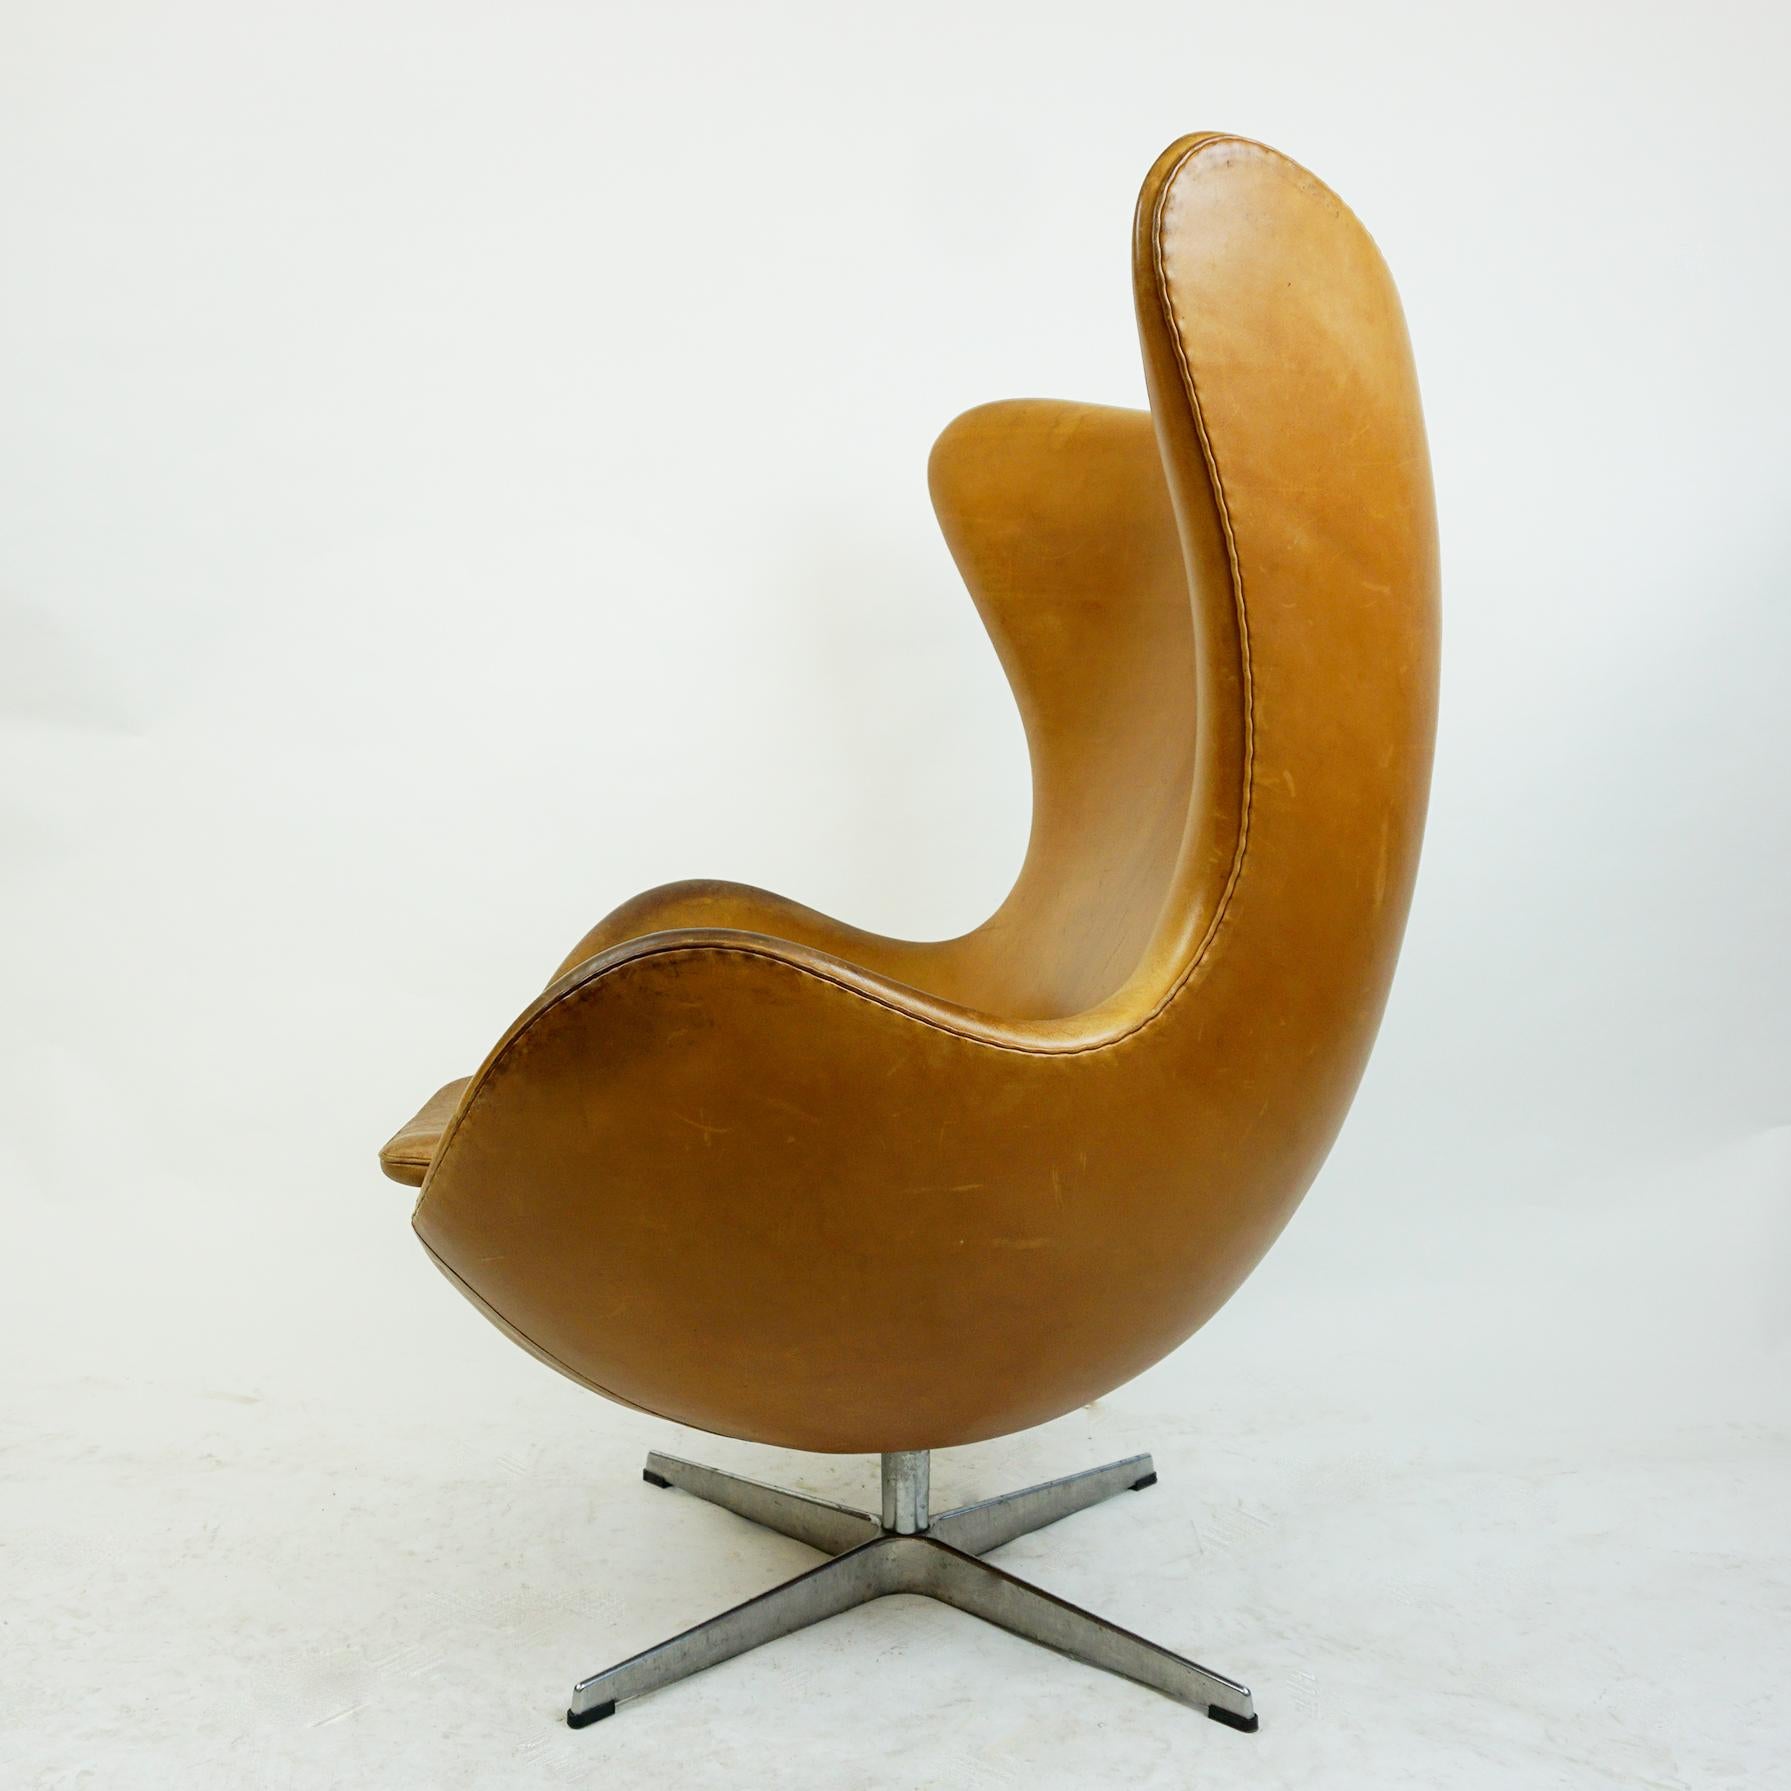 Cast Cognac Leather Egg Chair, Mod. 3317 by Arne Jacobsen for Fritz Hansen